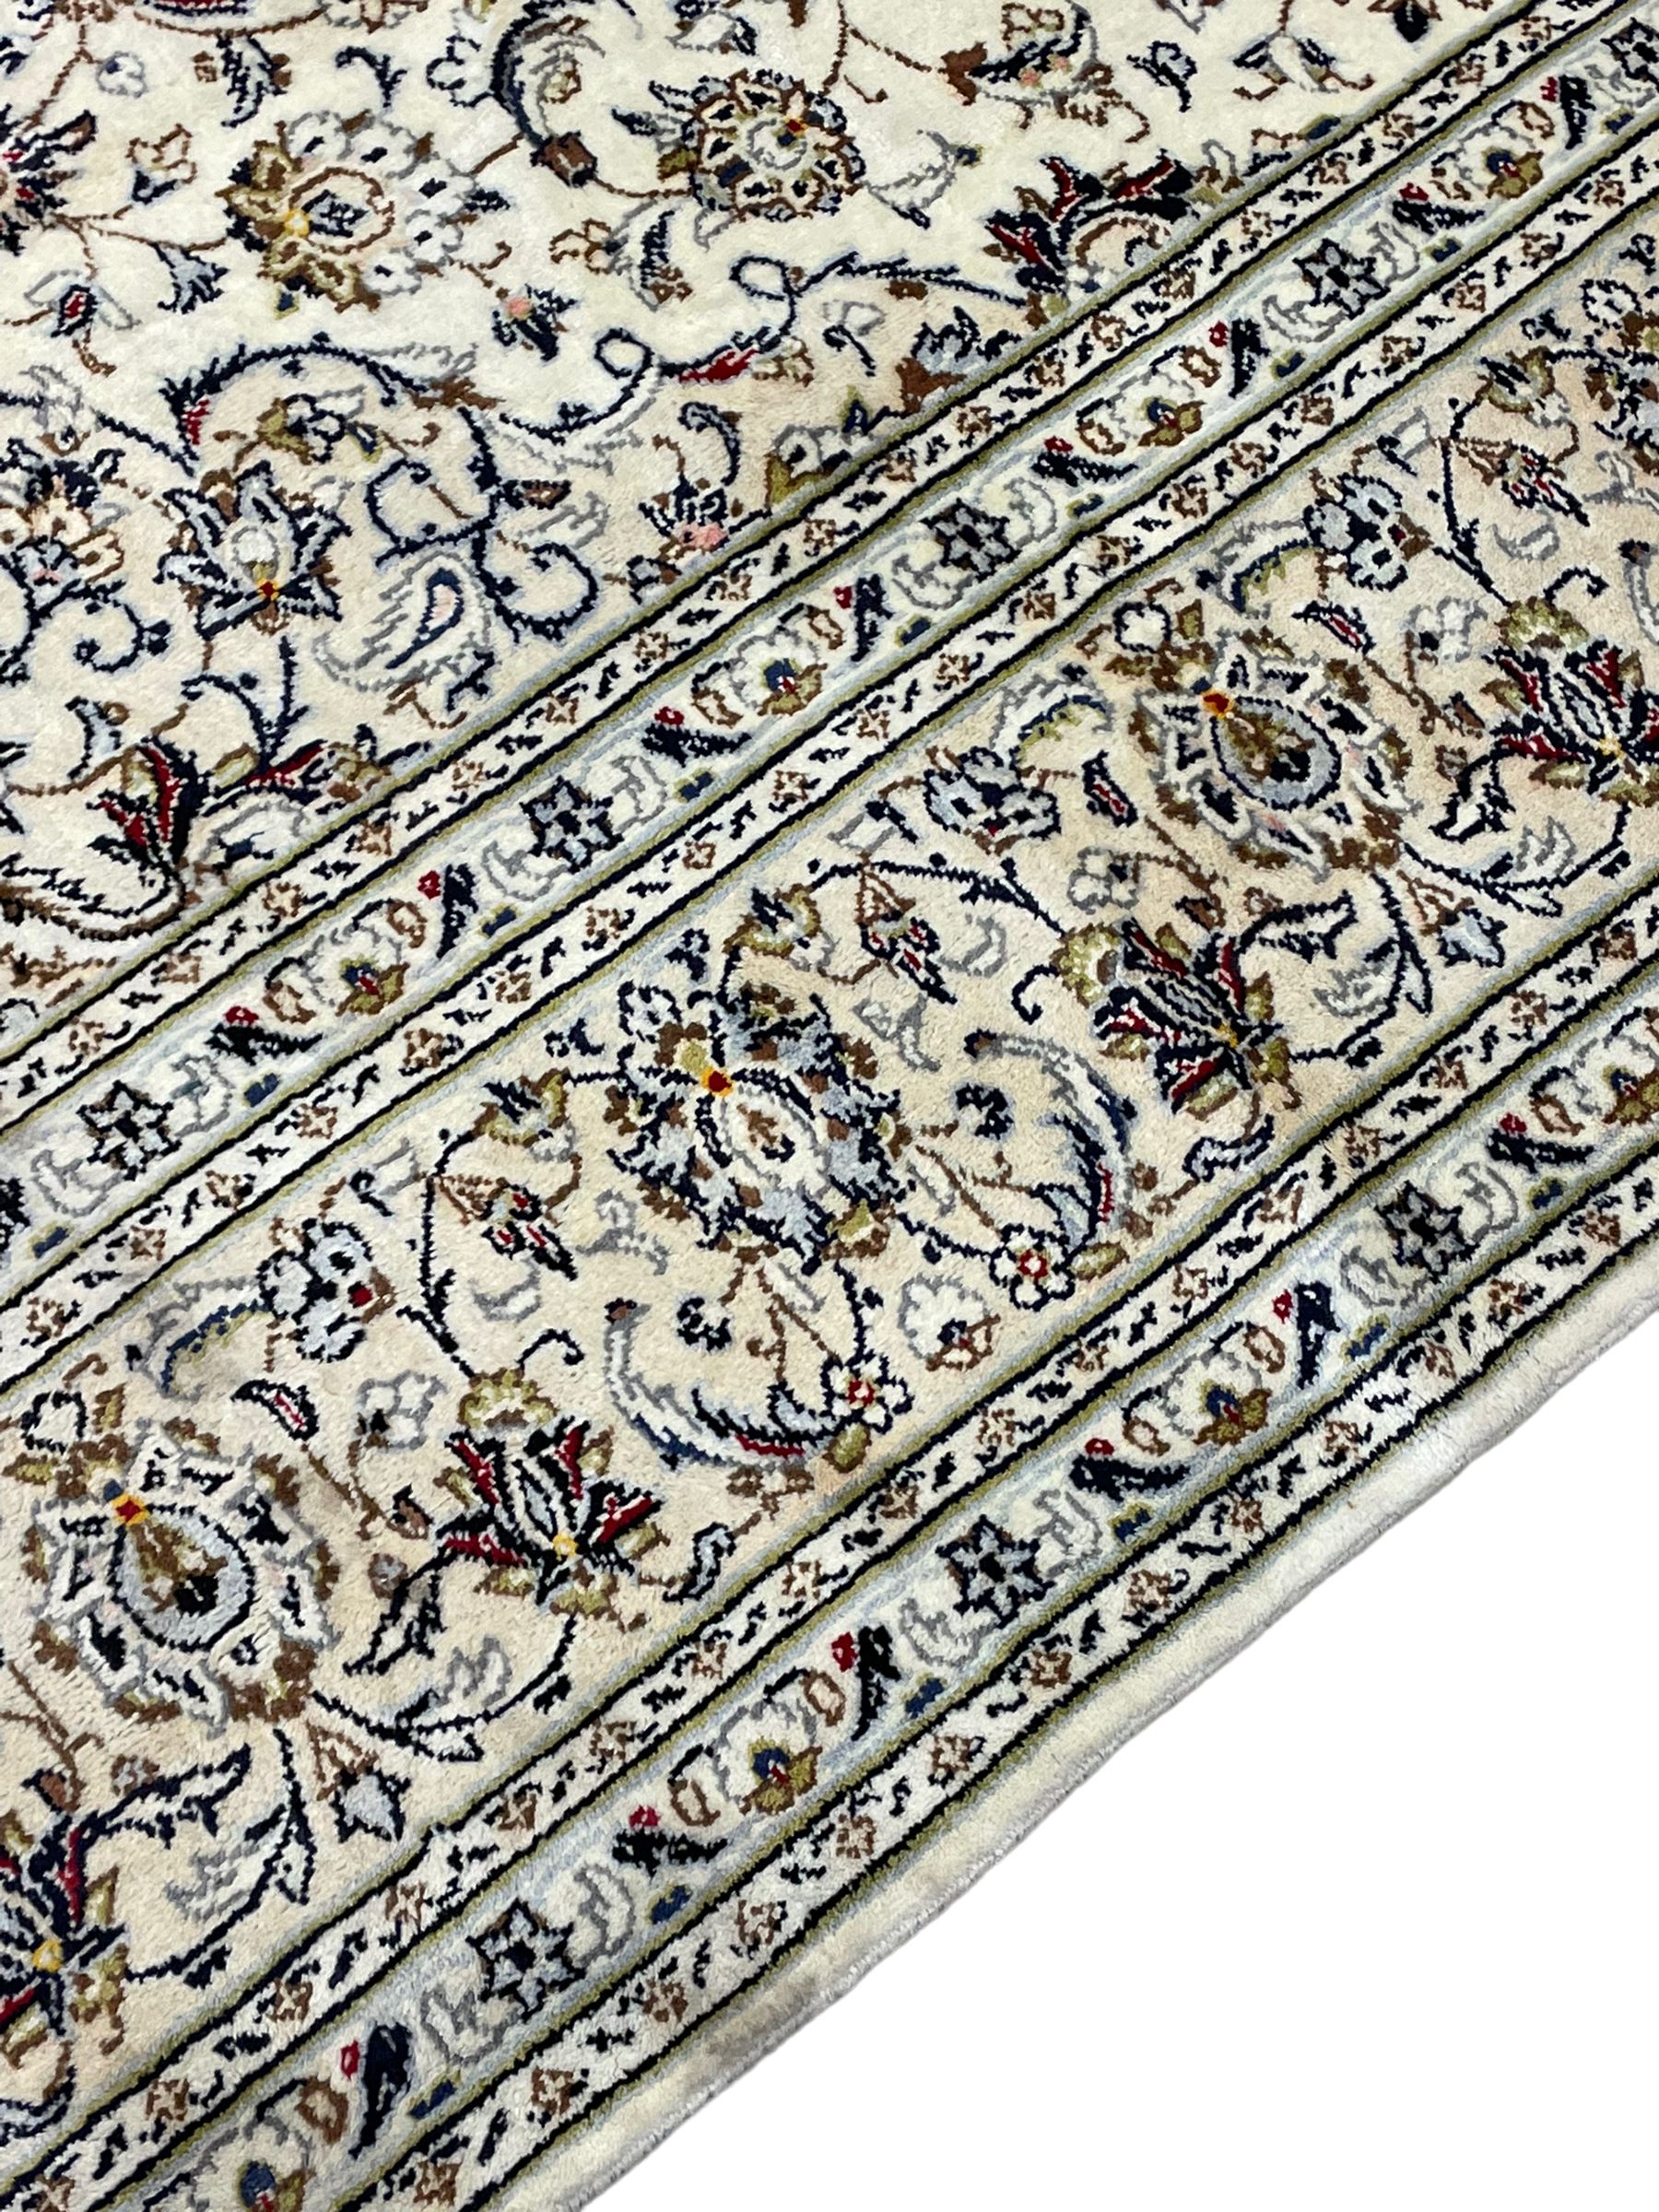 Central Persian Kashan ivory carpet - Image 3 of 7